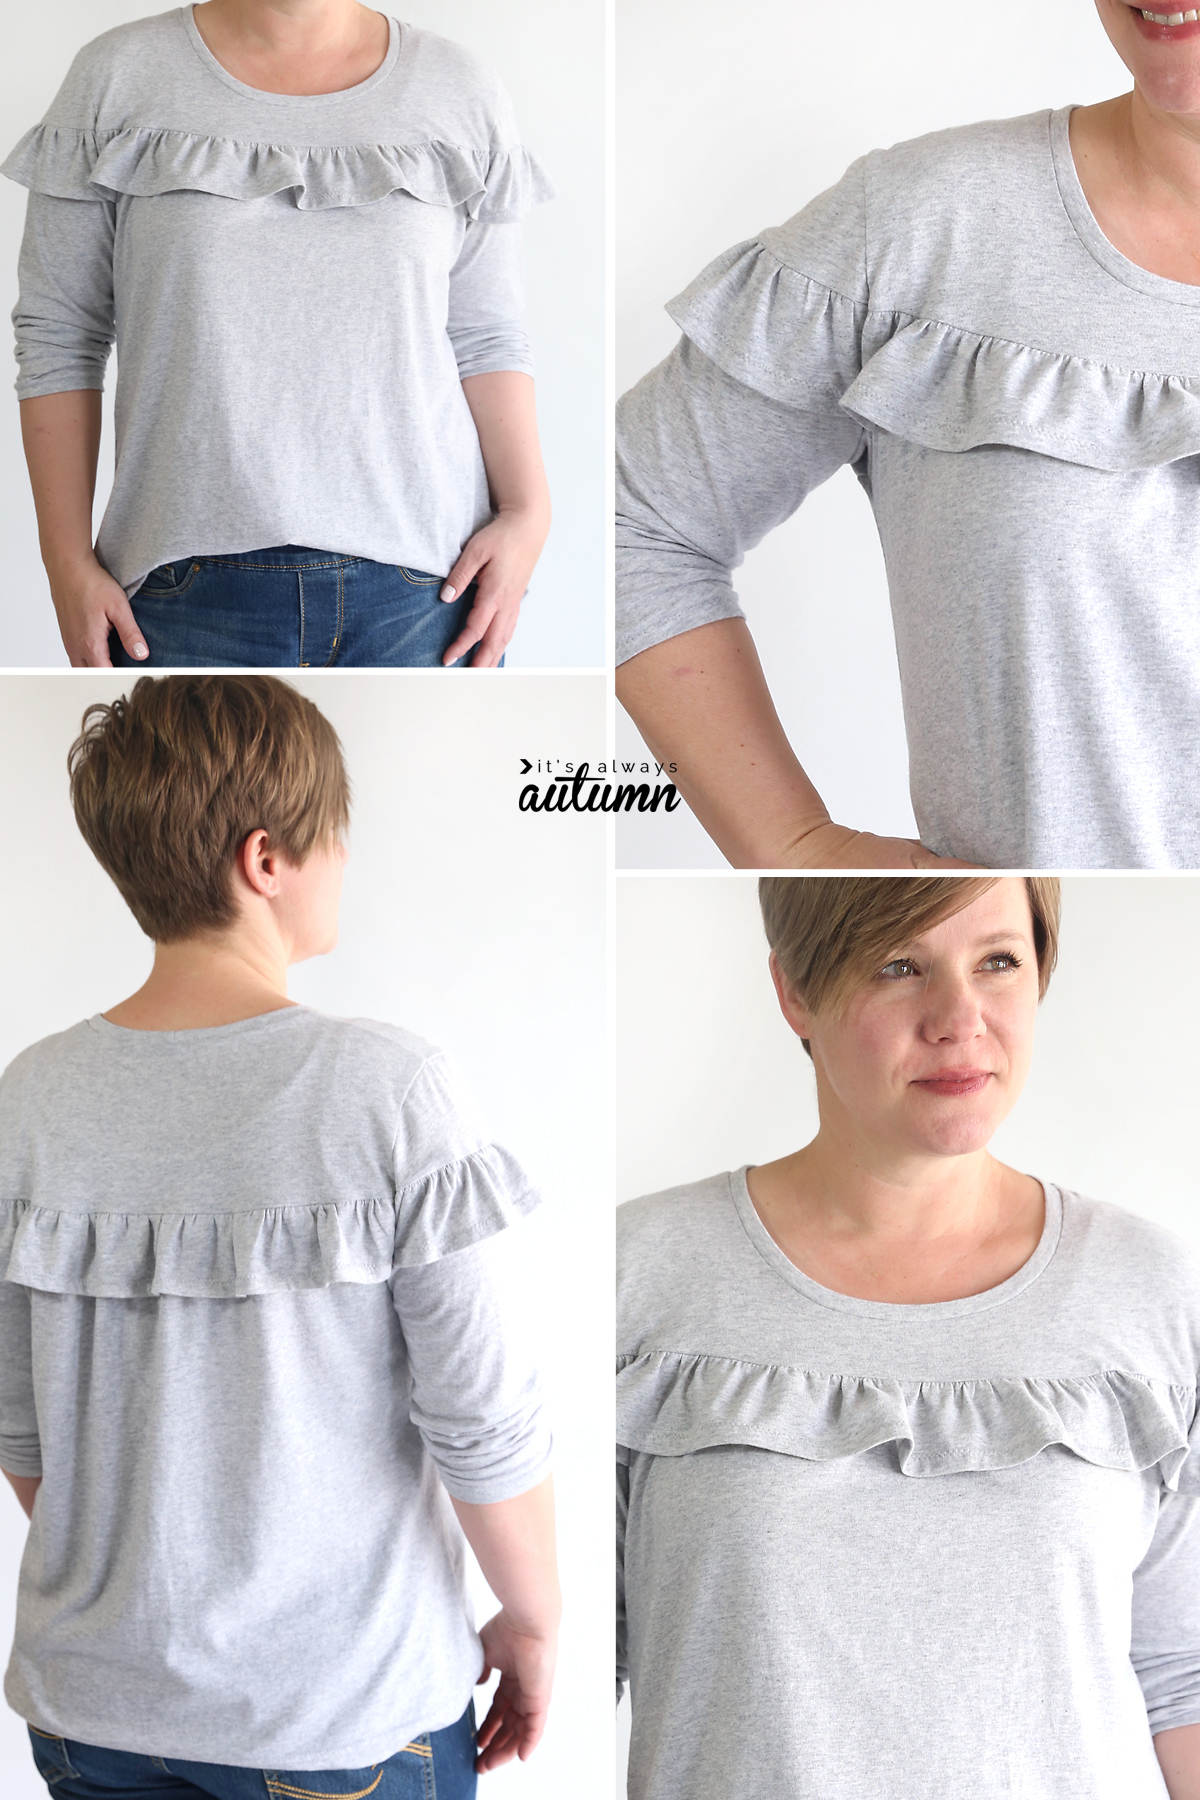 Women's ruffle top - free sewing pattern in size L.